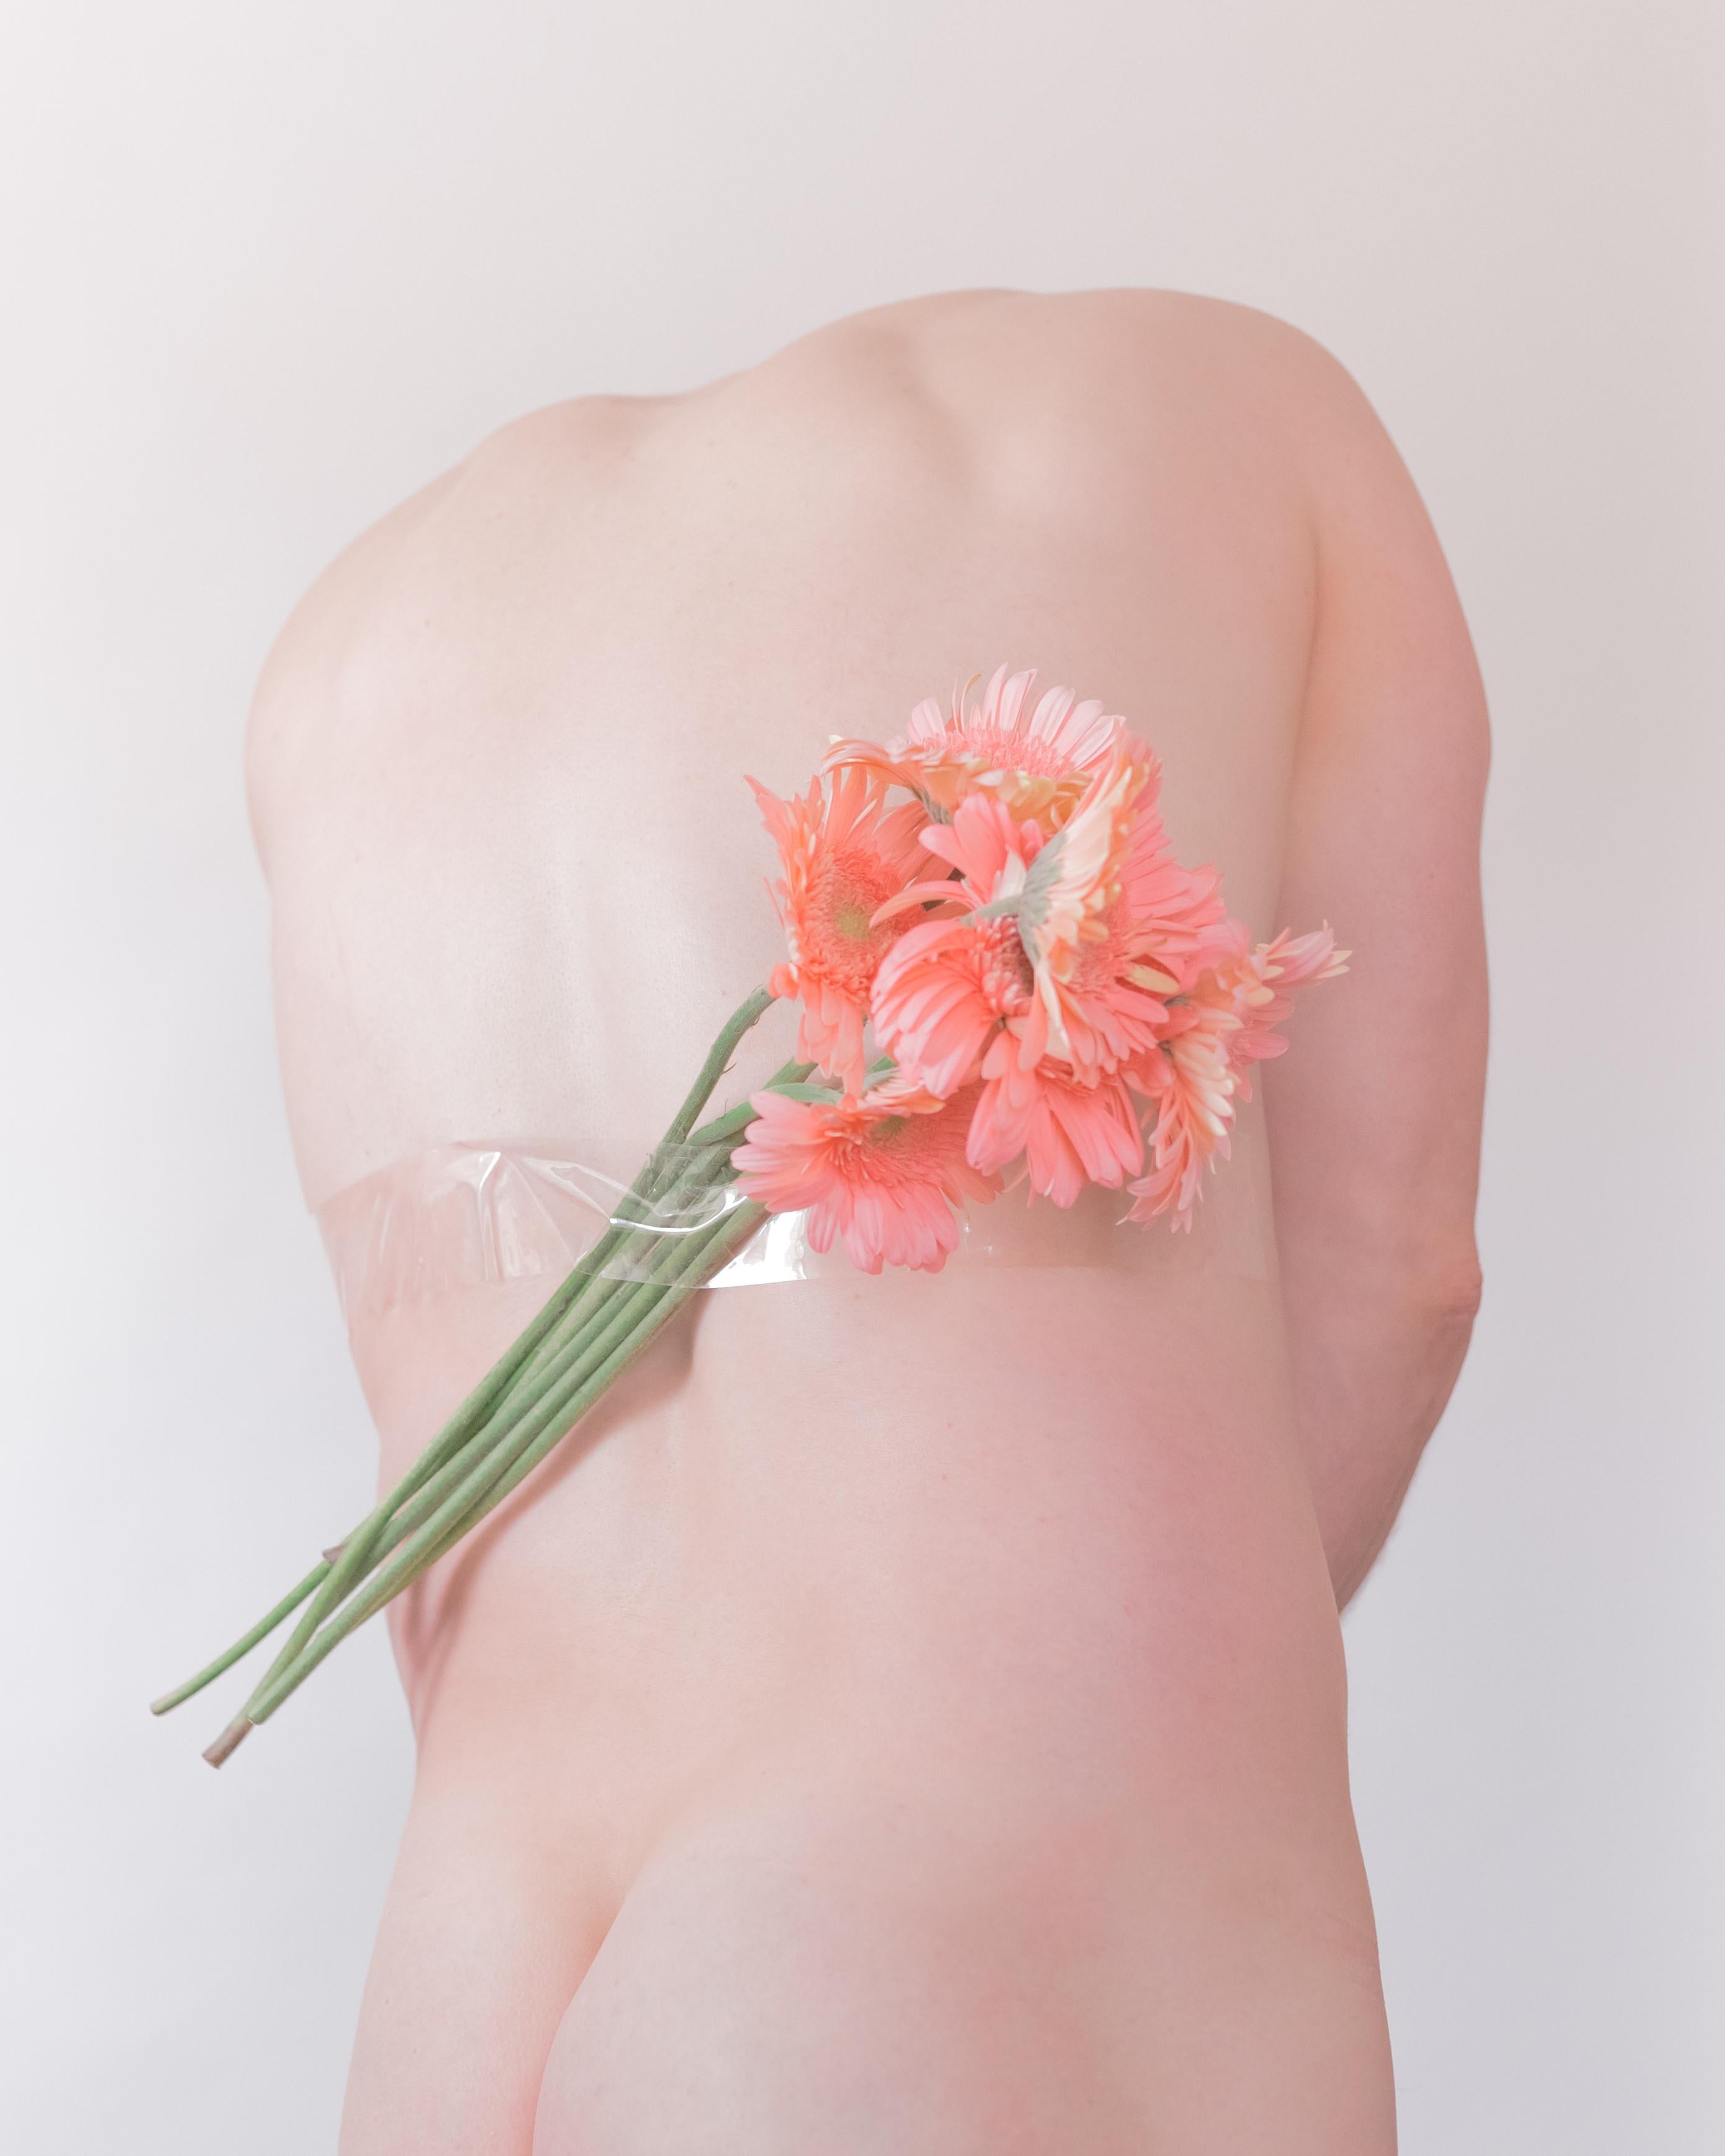 David Pugh Portrait Photograph - Tape (Male, Back, Flowers, Pink, Rose, Soft, Portrait, Still Life, Nude, Tape)